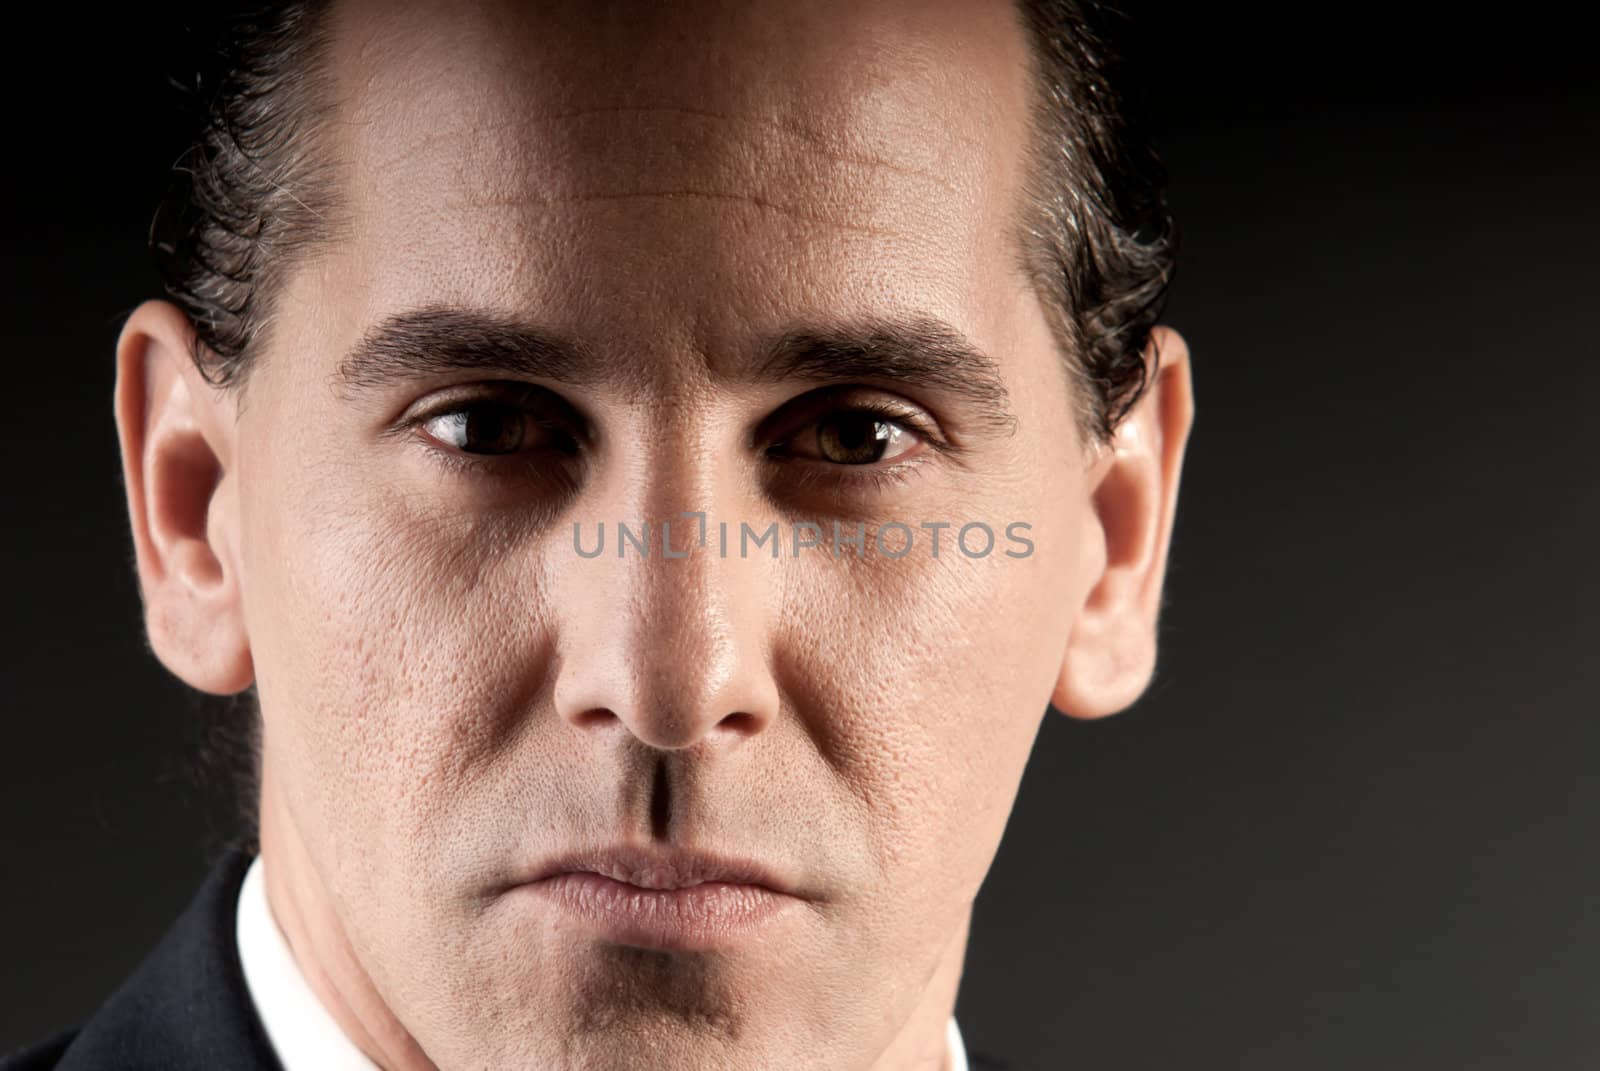 Adult businessman closeup portrait on dark background. by dgmata